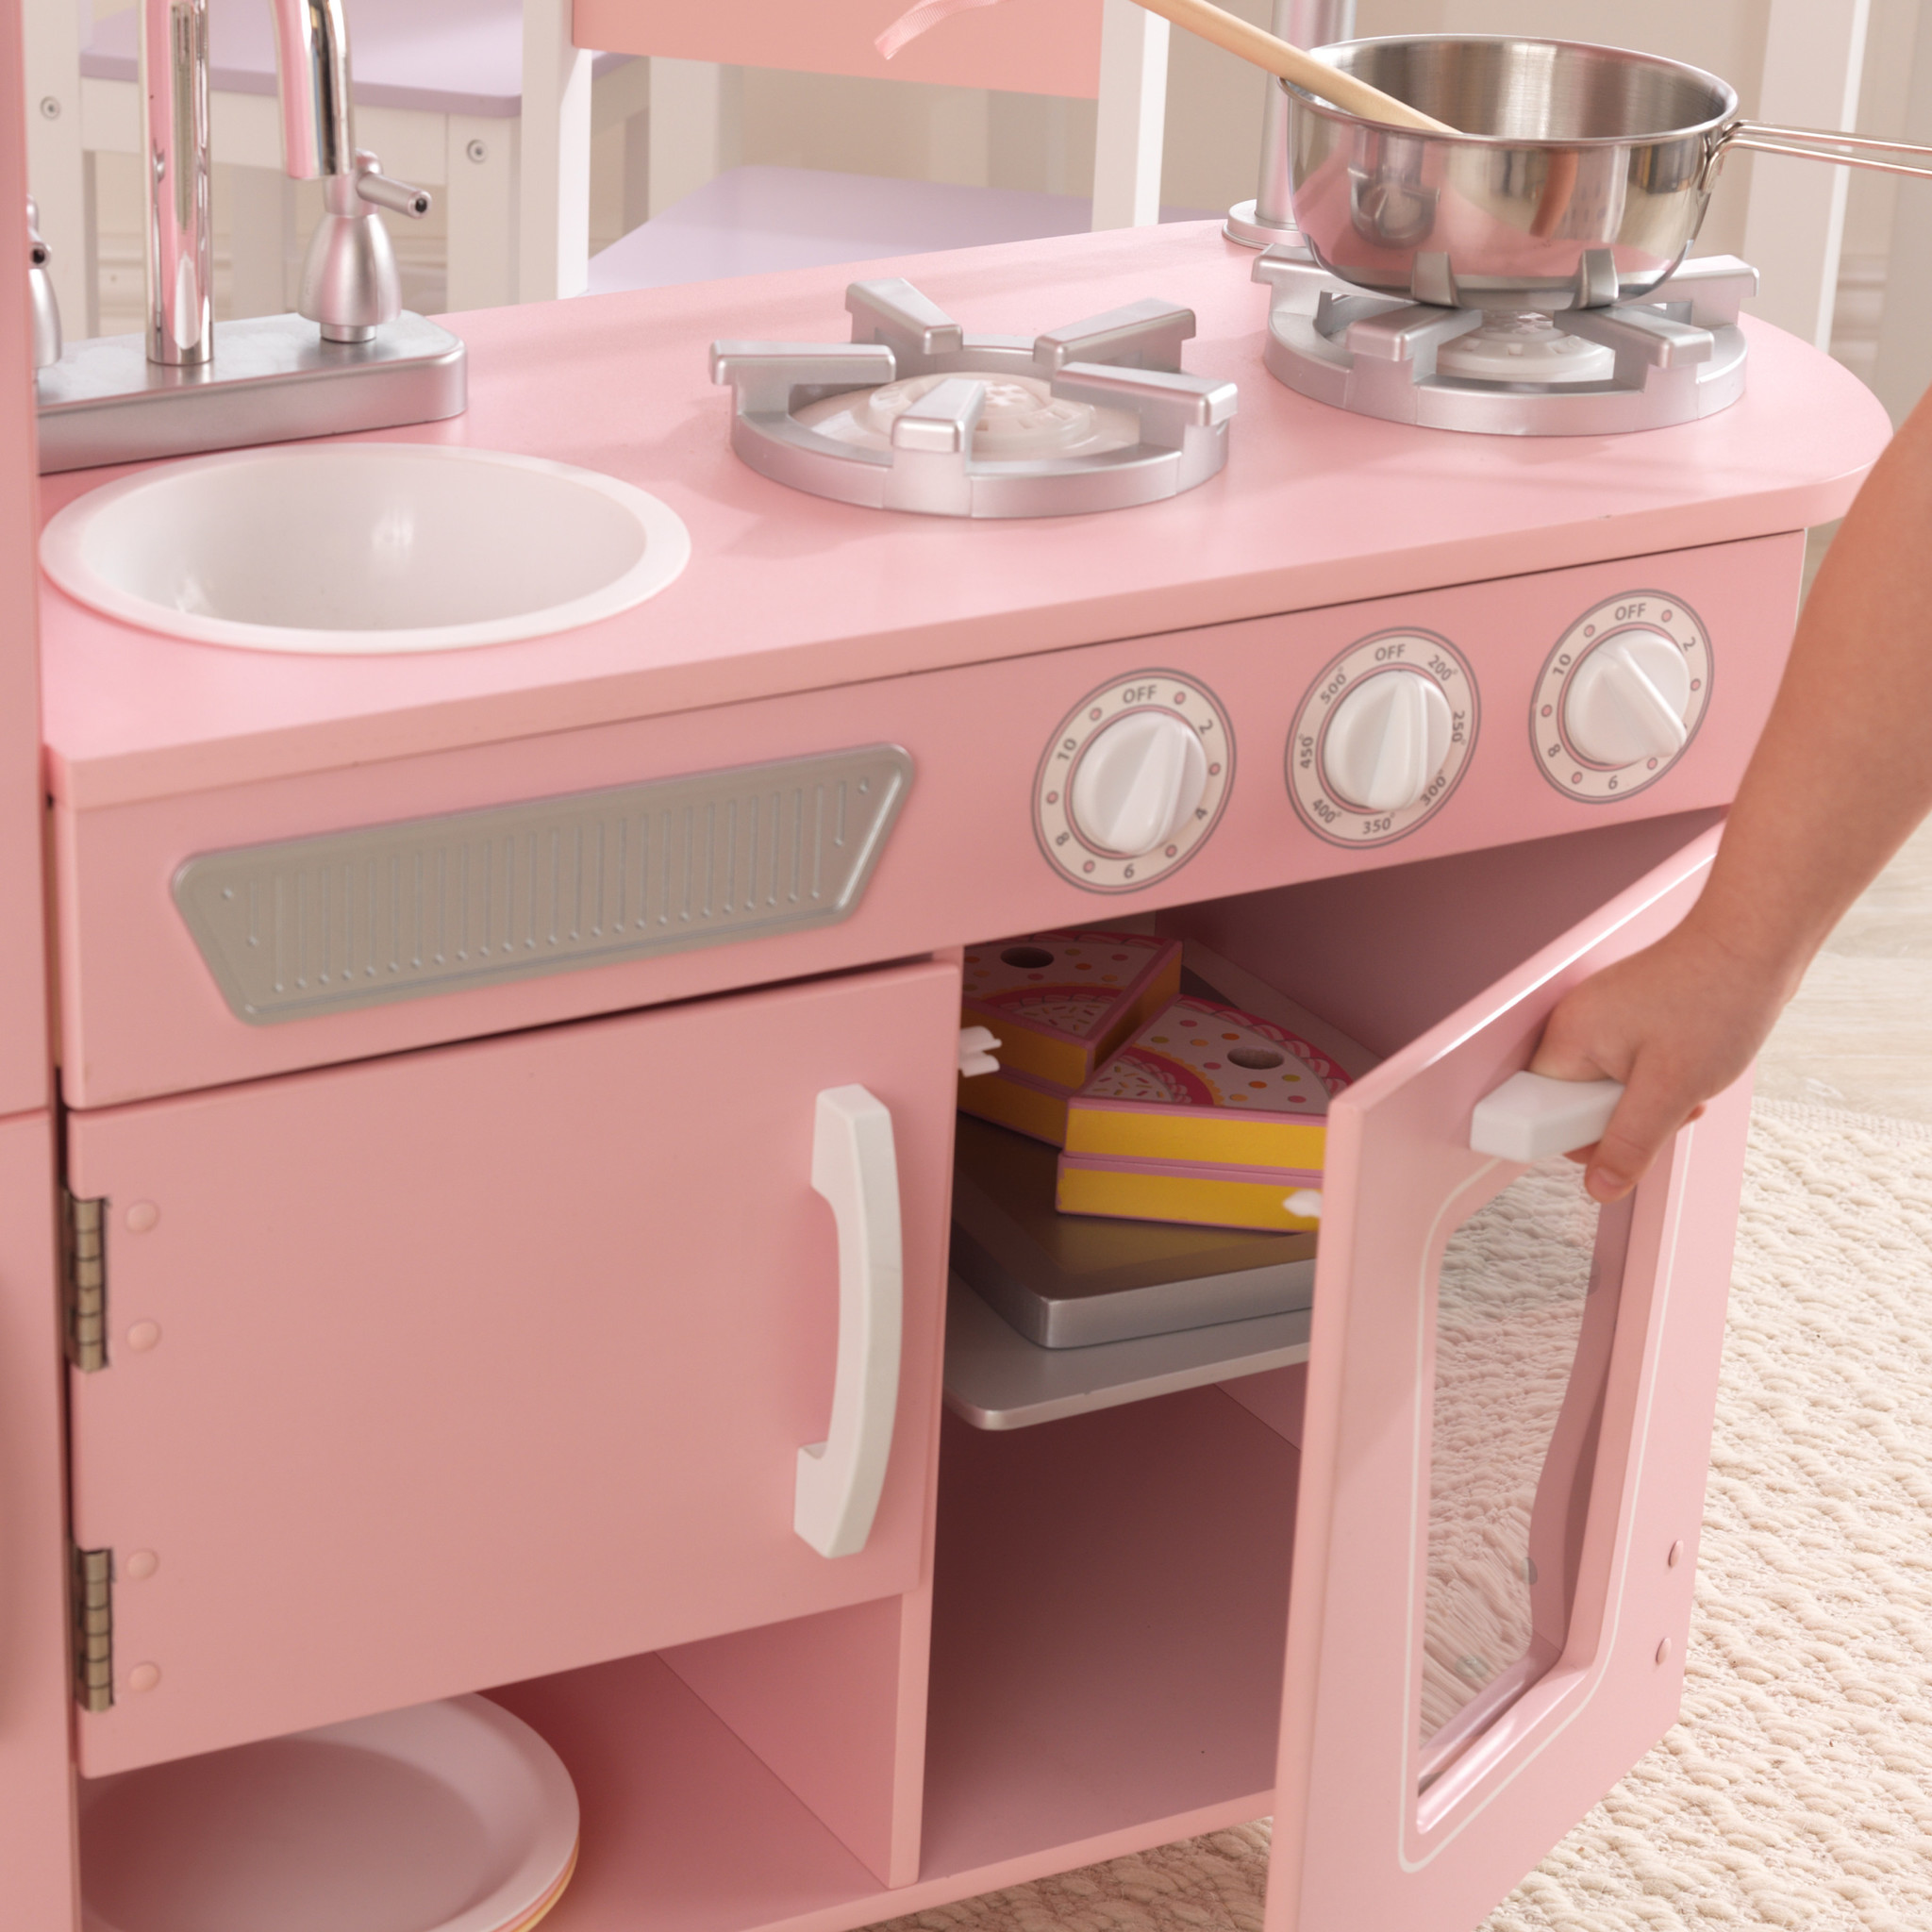 https://cdn.webshopapp.com/shops/9071/files/422536516/play-kitchen-pink-wooden-toy-kitchen-vintage.jpg